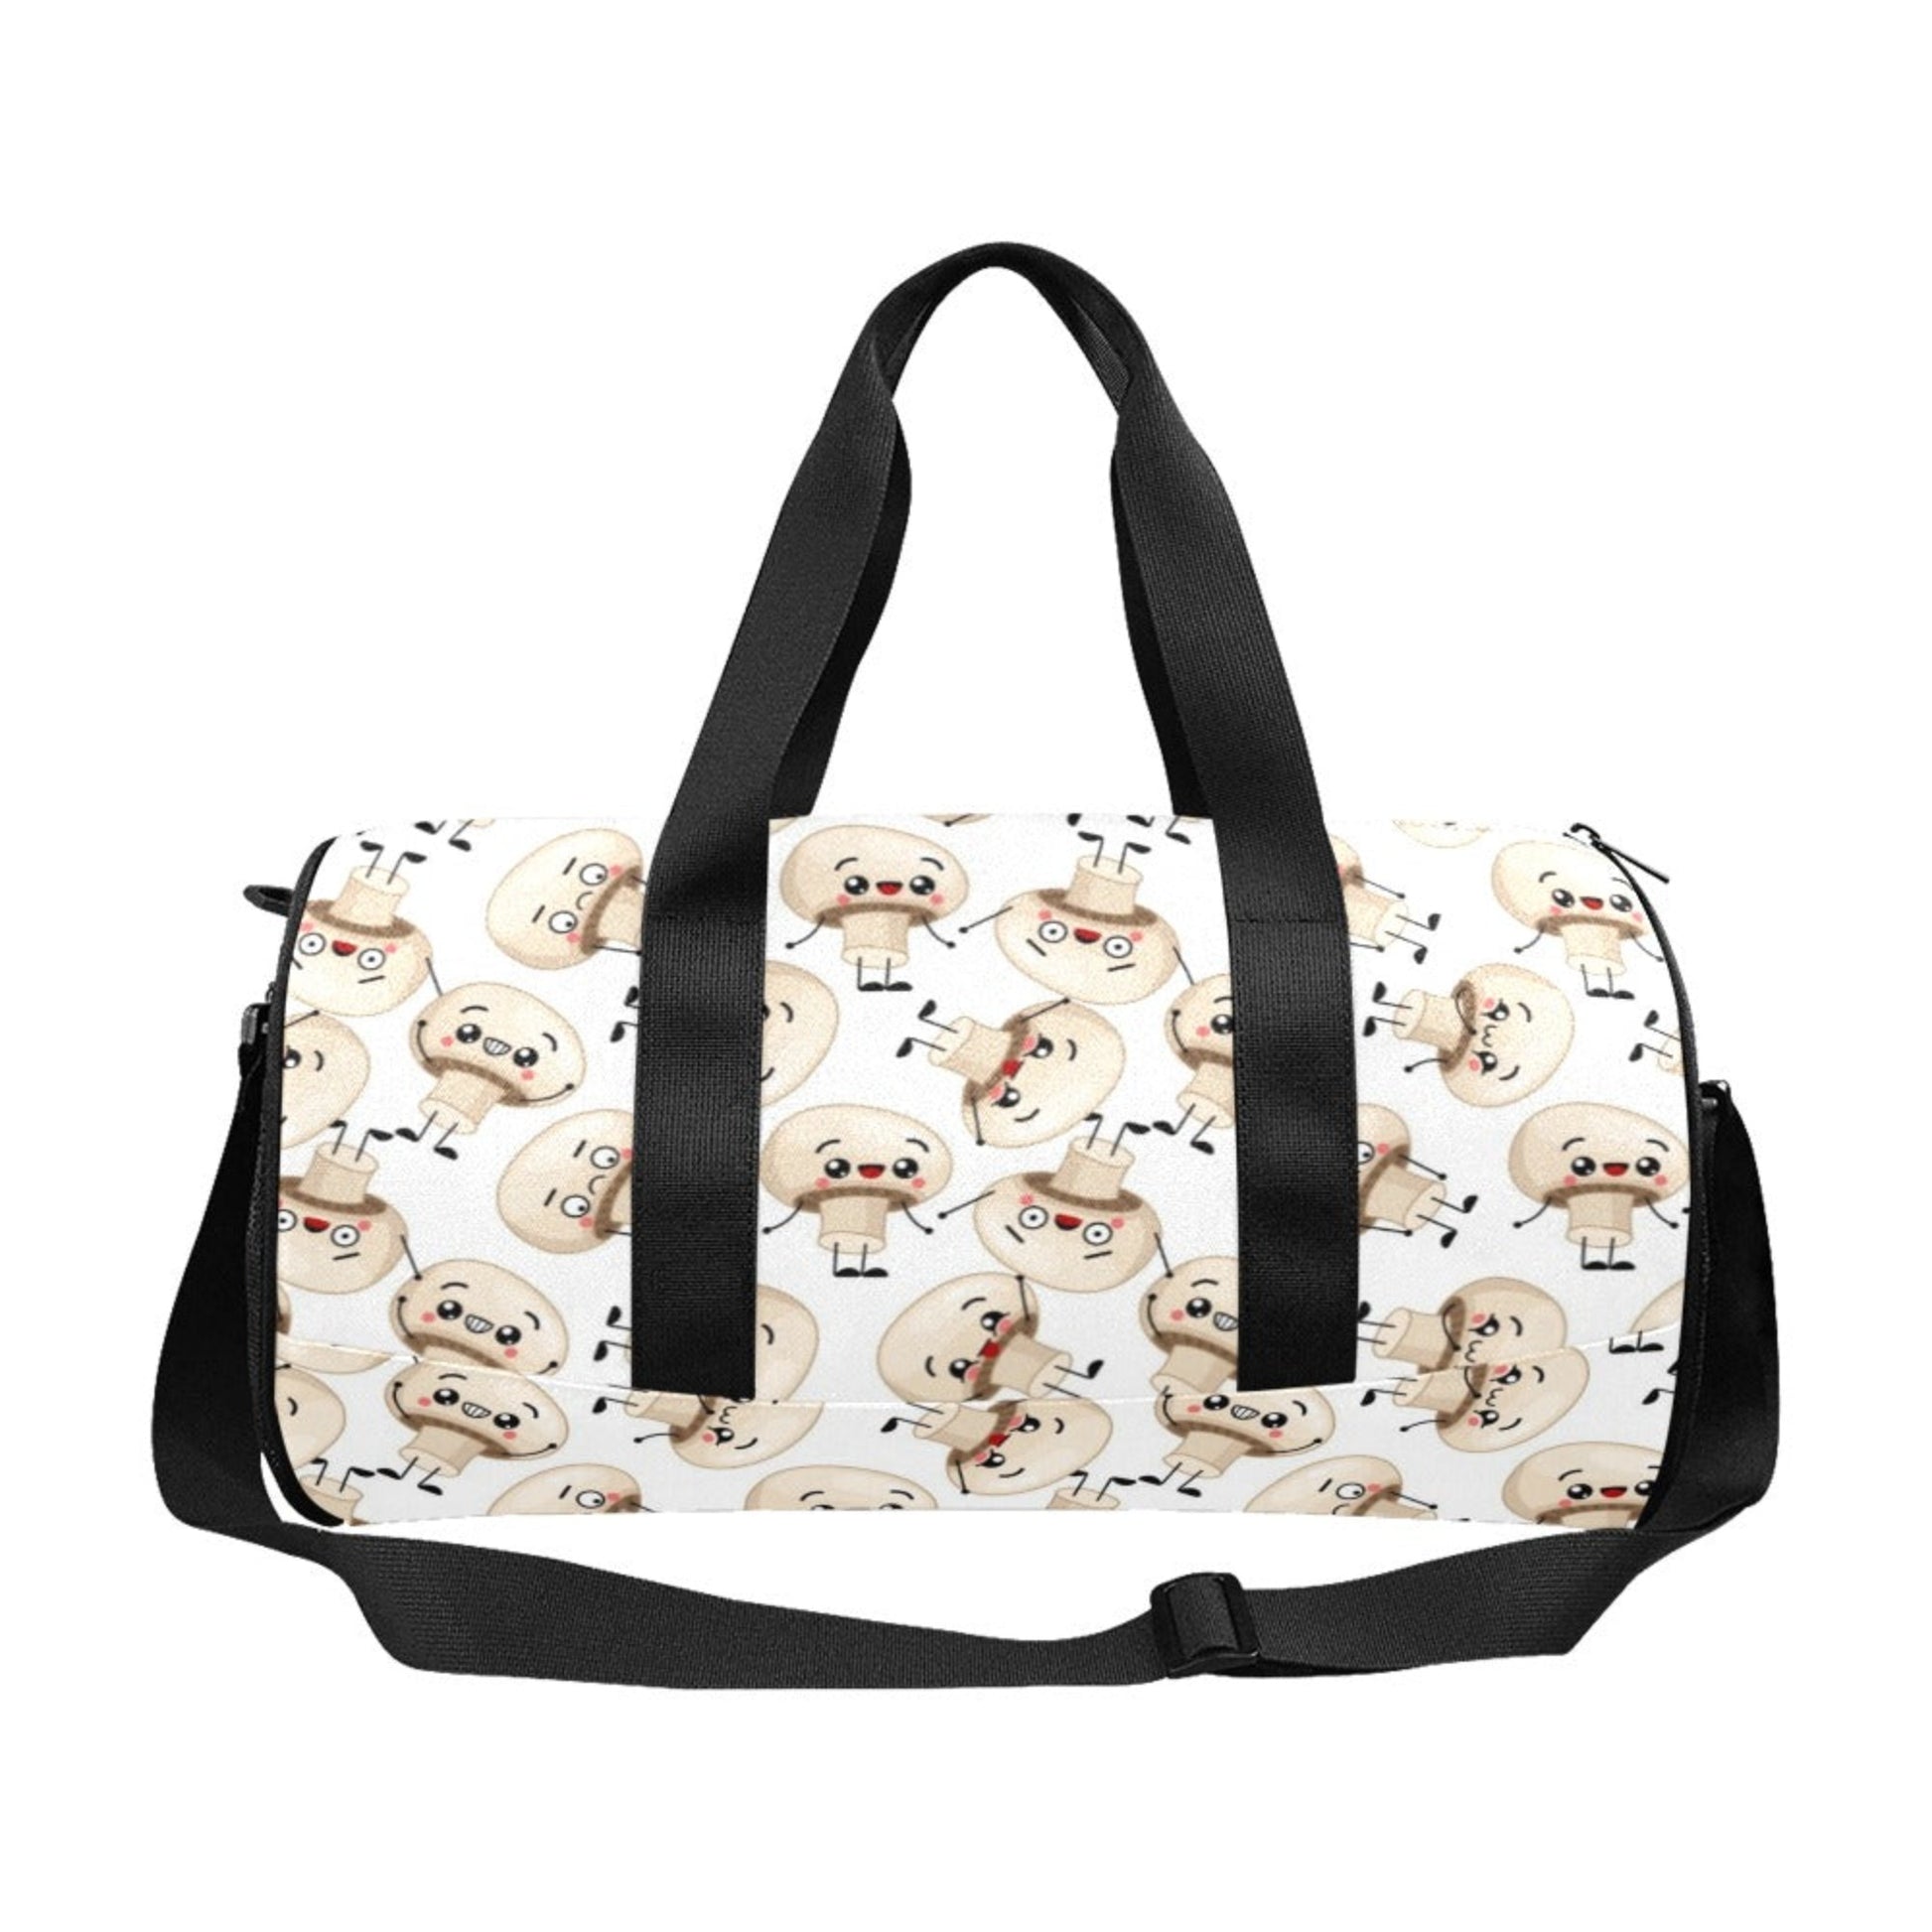 Cute Mushrooms - Round Duffle Bag Round Duffle Bag